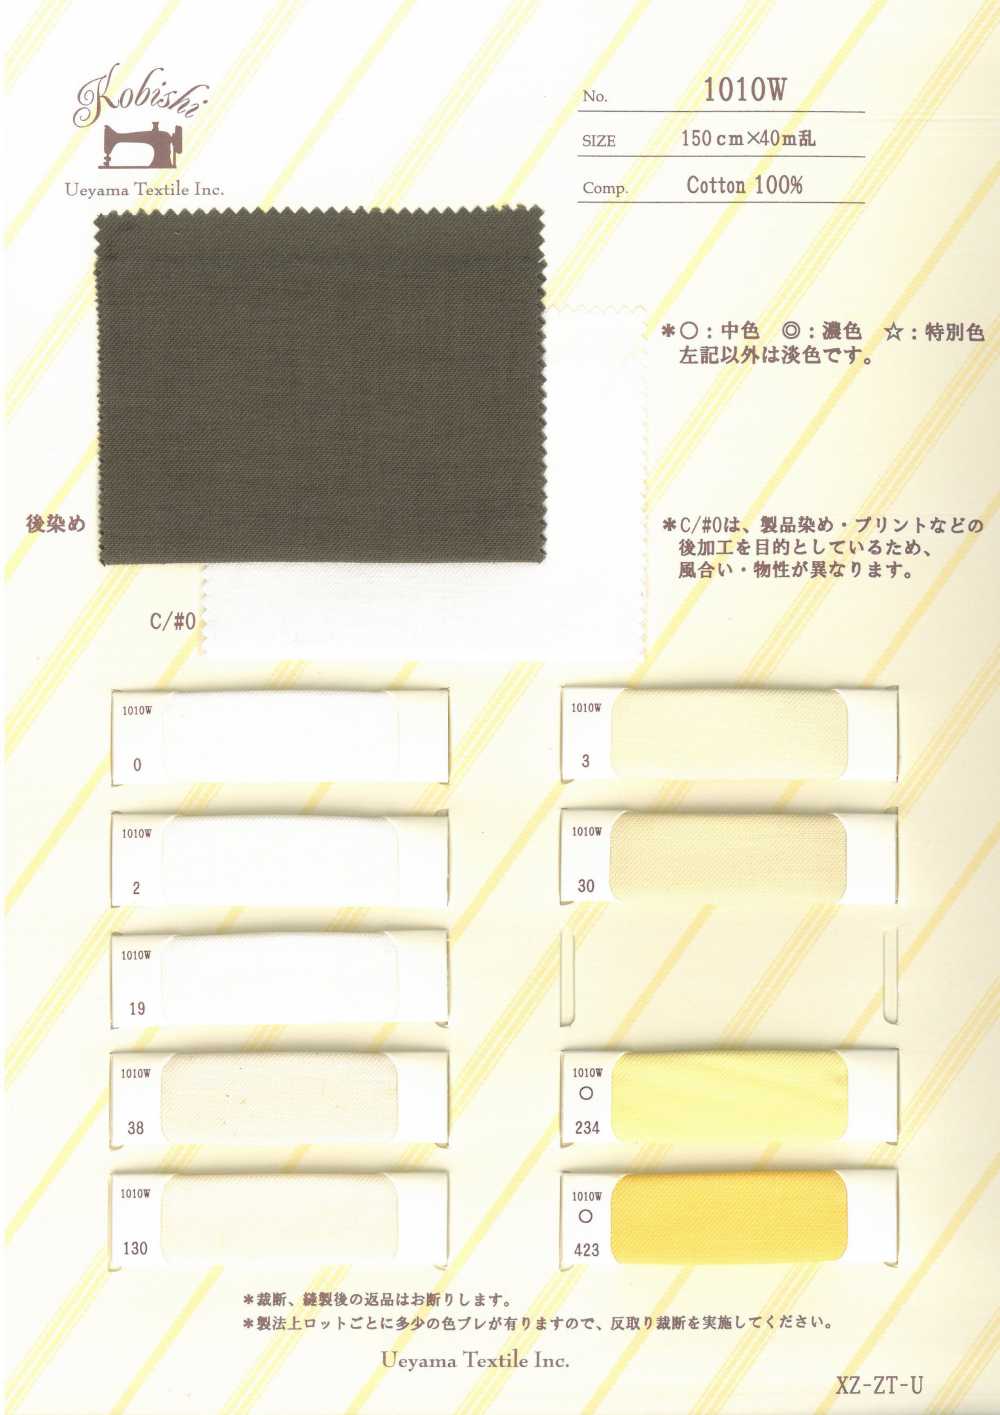 1010W No. 4 Wide Width Pocket Lining Ueyama Textile